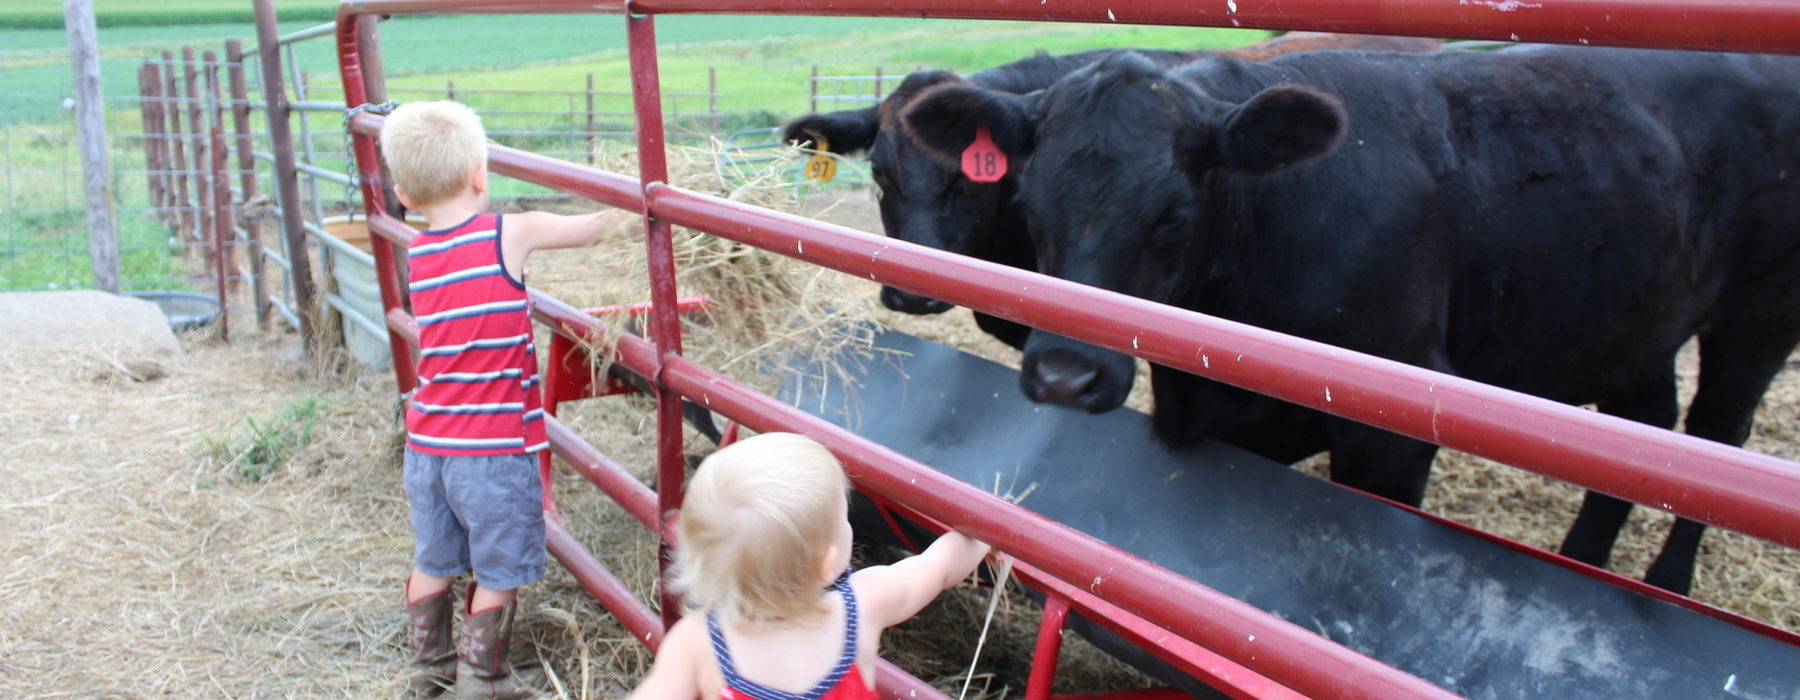 Children feeding cows